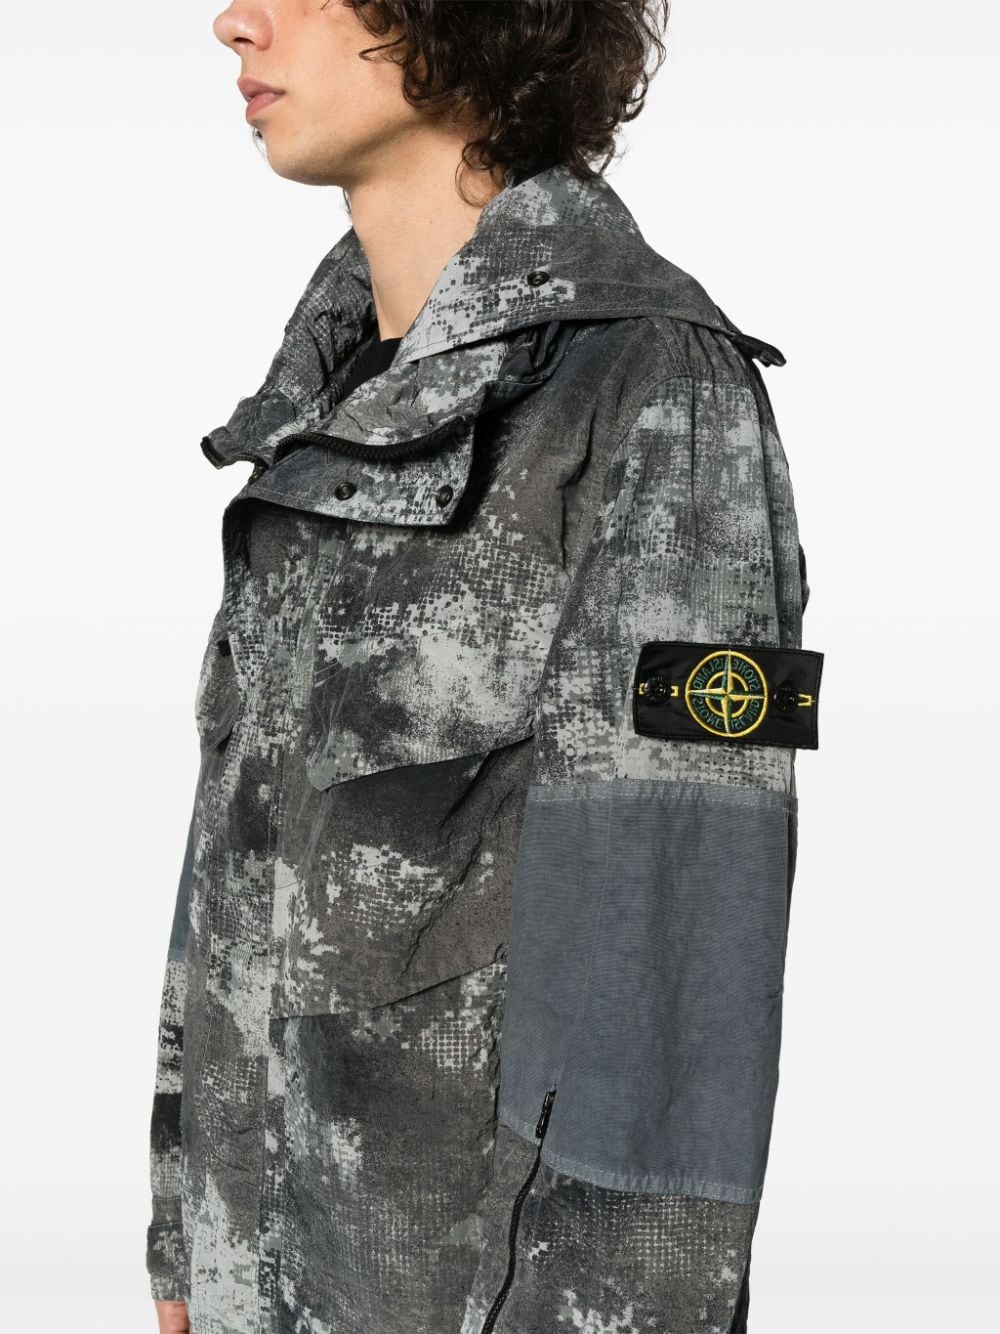 STONE ISLAND Nylon Camouflage Jacket for Men - Charcoal Grey/Light Grey Camo Pattern